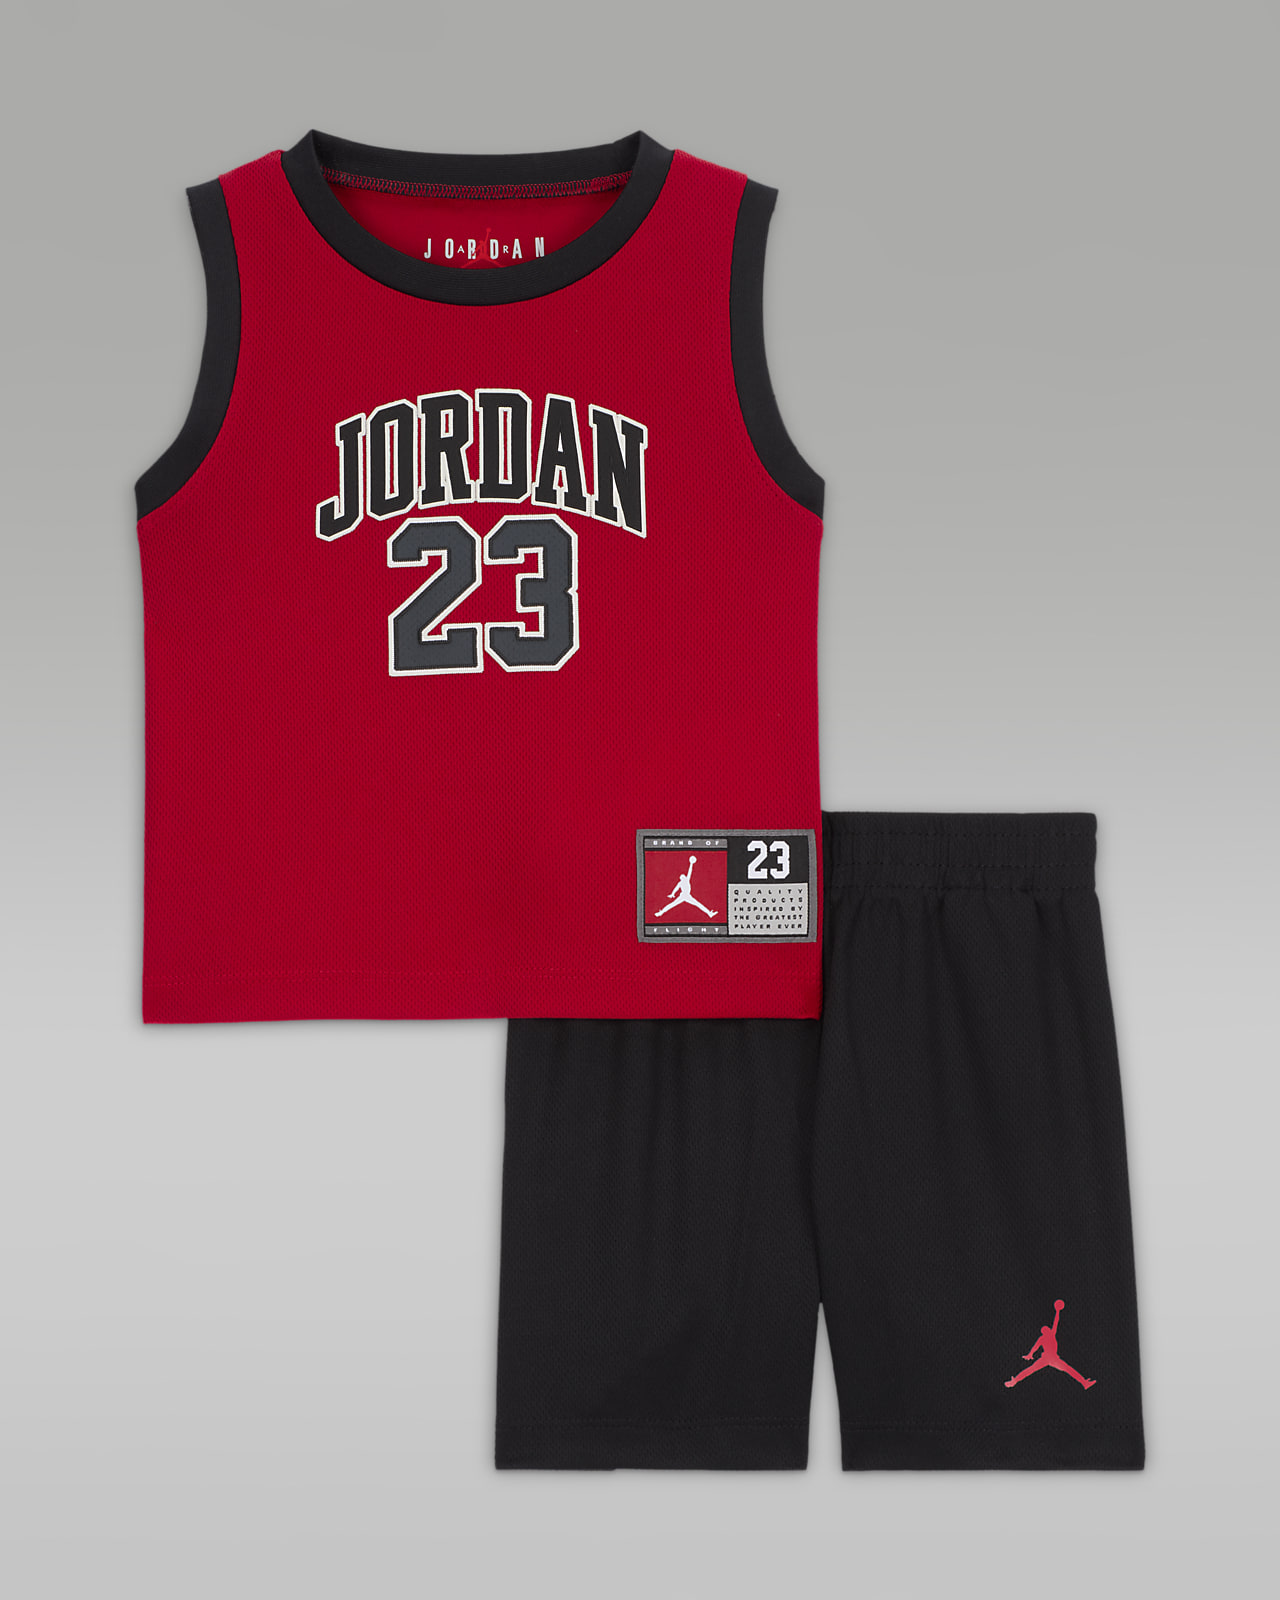 Jordan 23 Baby (12-24M) 2-Piece Jersey Set